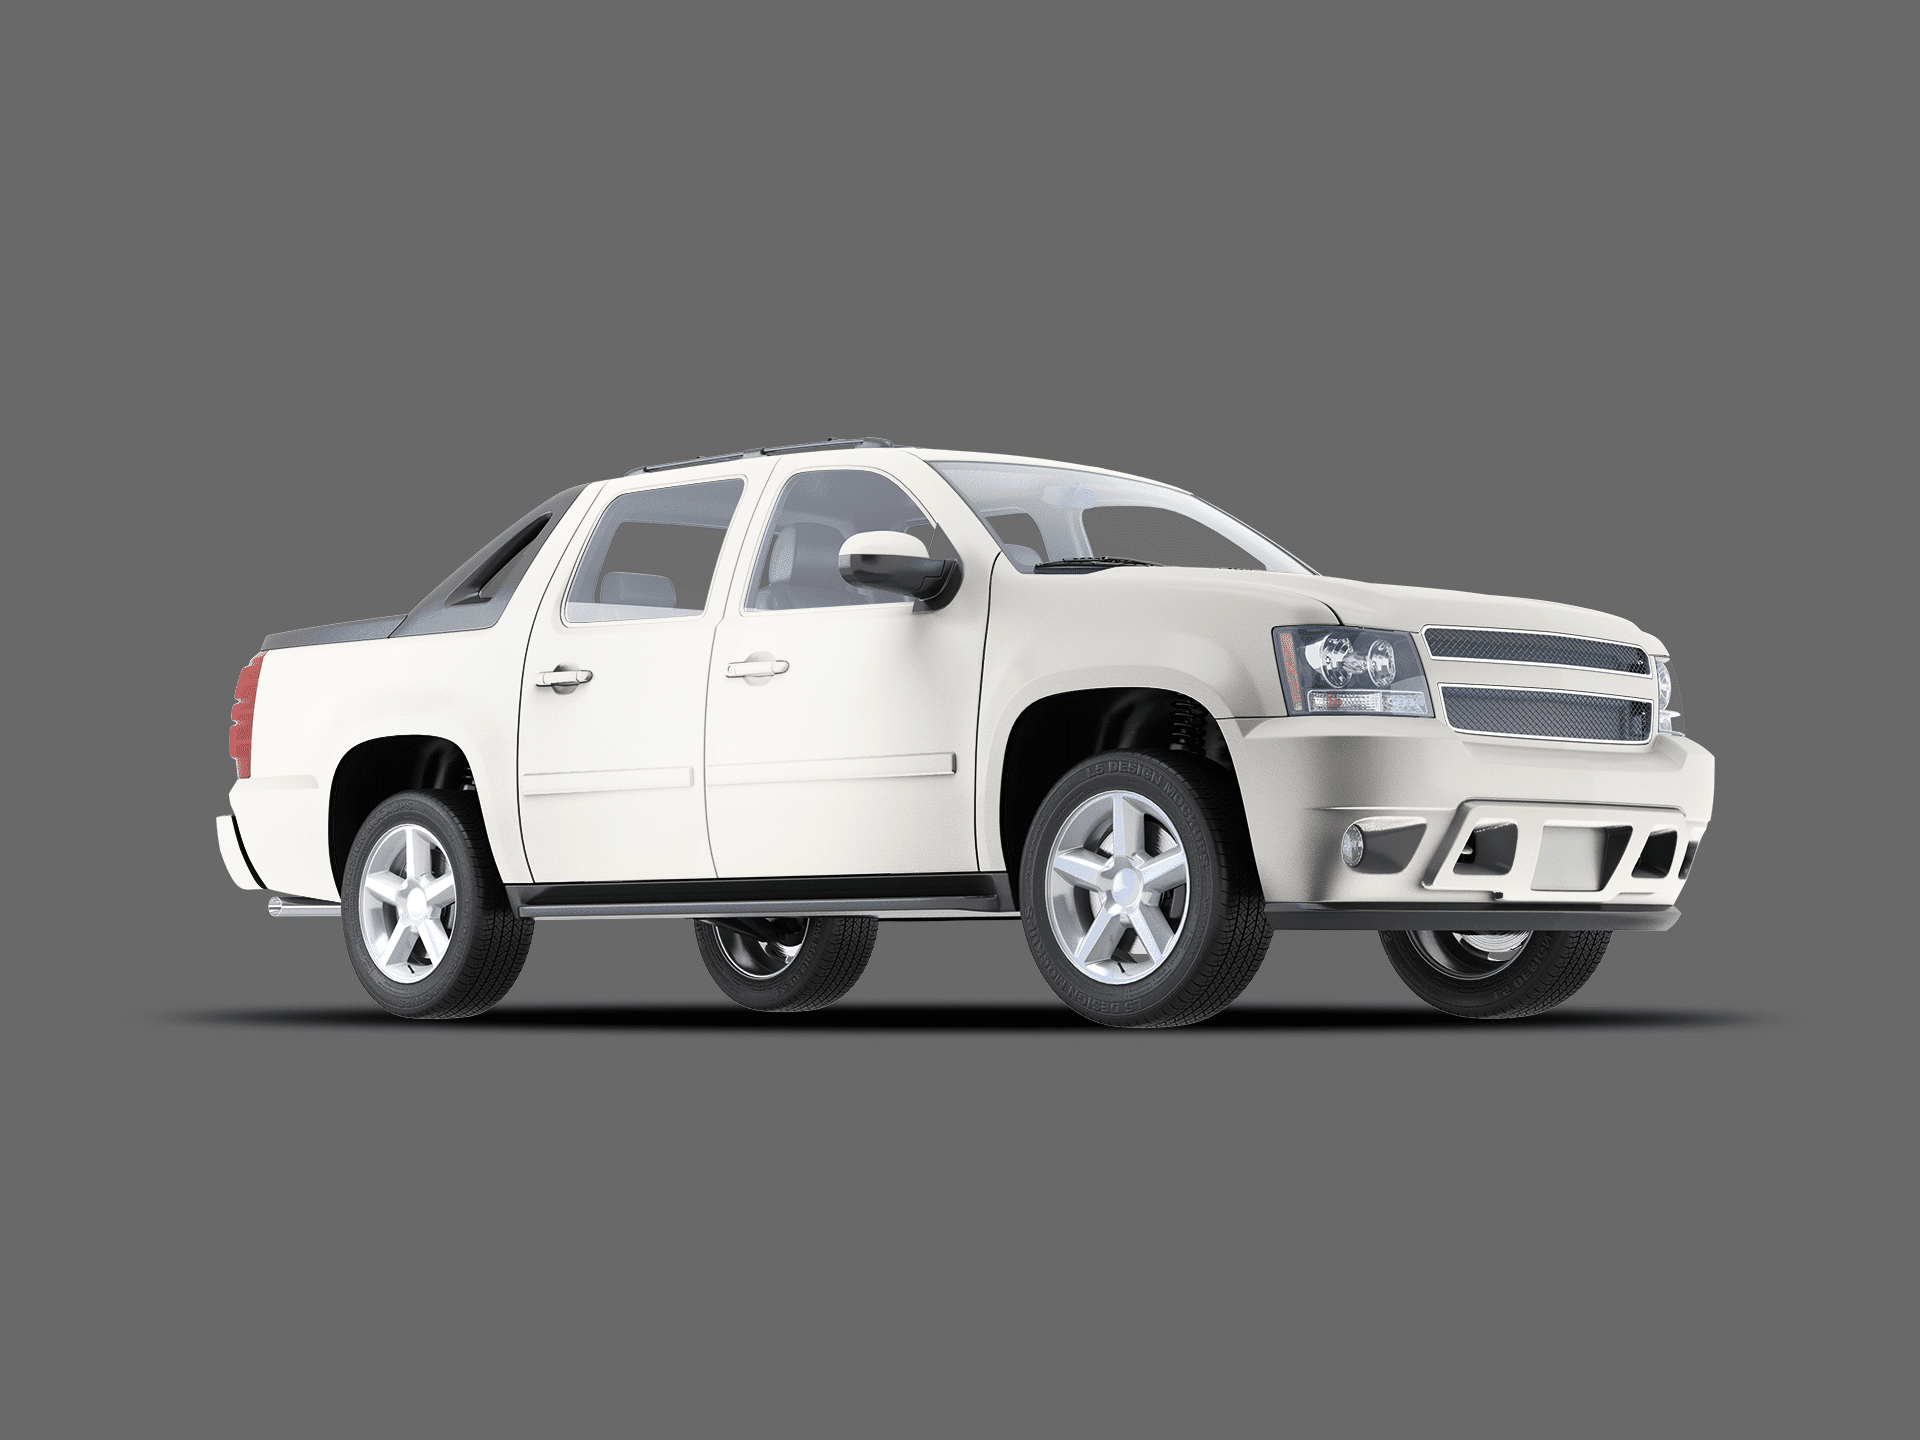 full-vehicle-wrap-mockup-featuring-a-pickup-truck-3597-el1